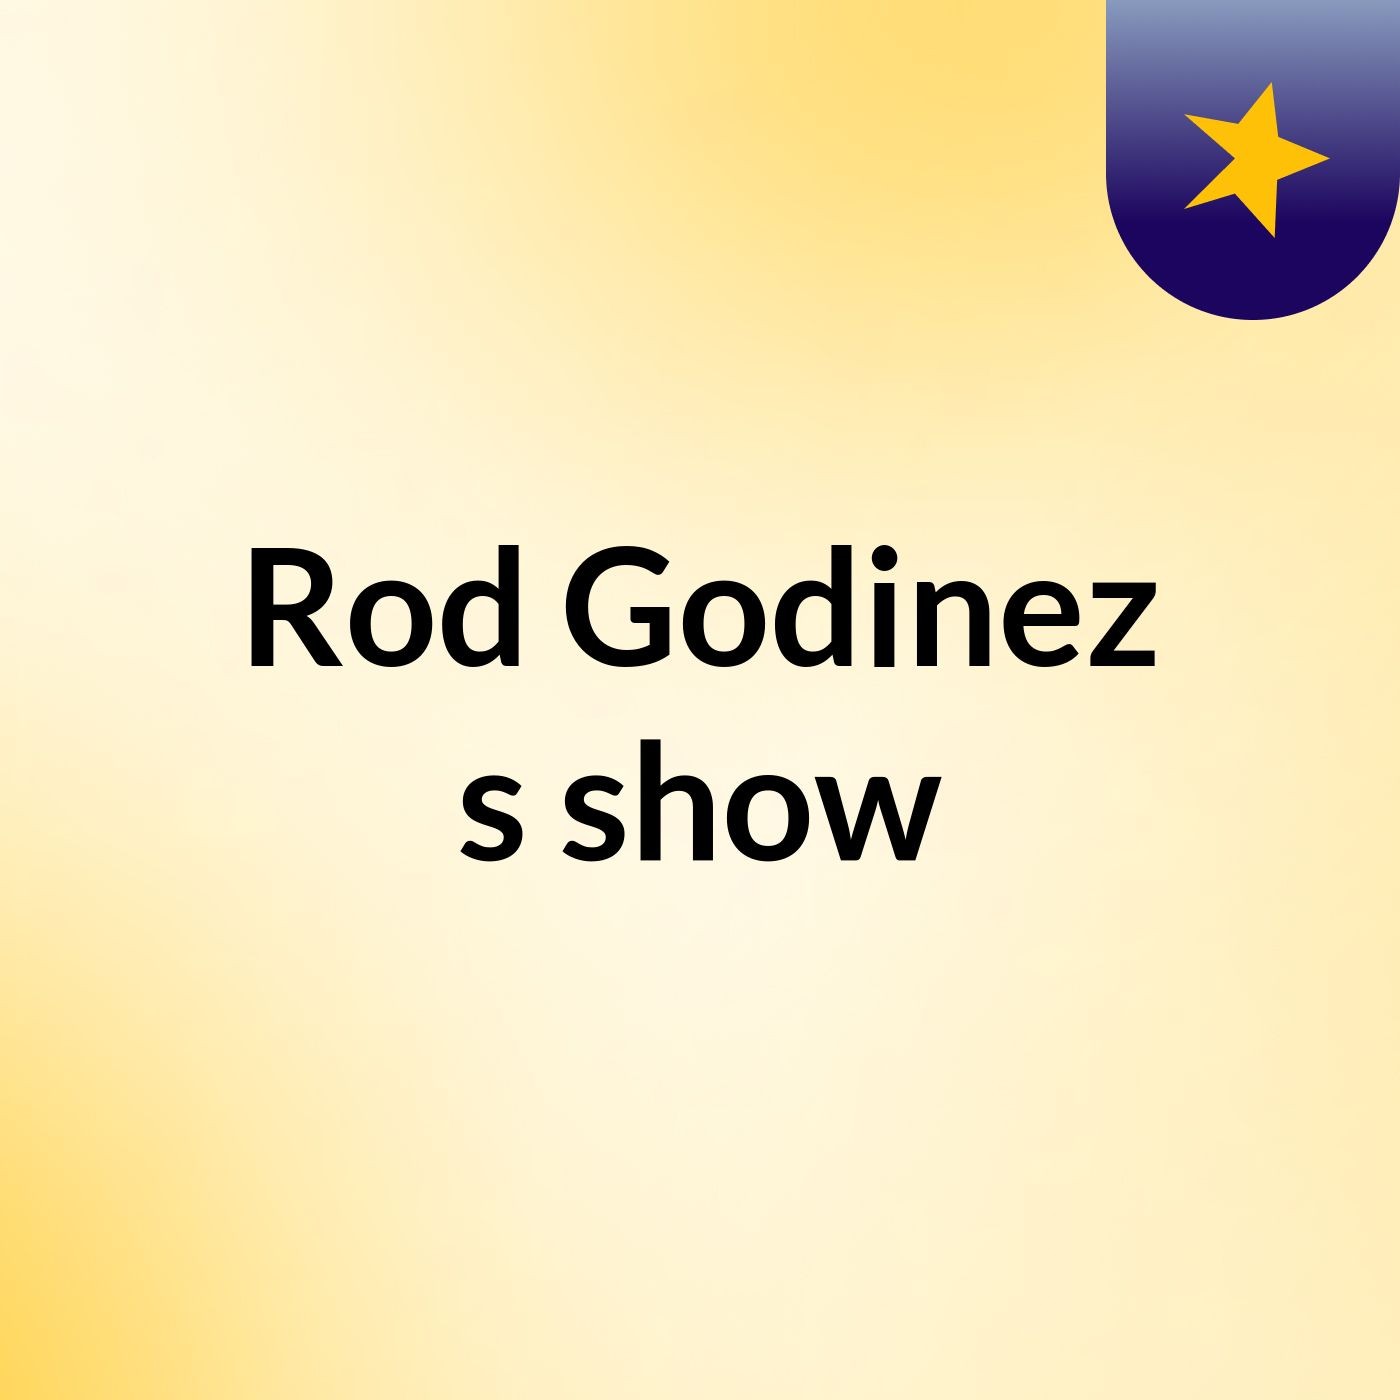 Rod Godinez's show